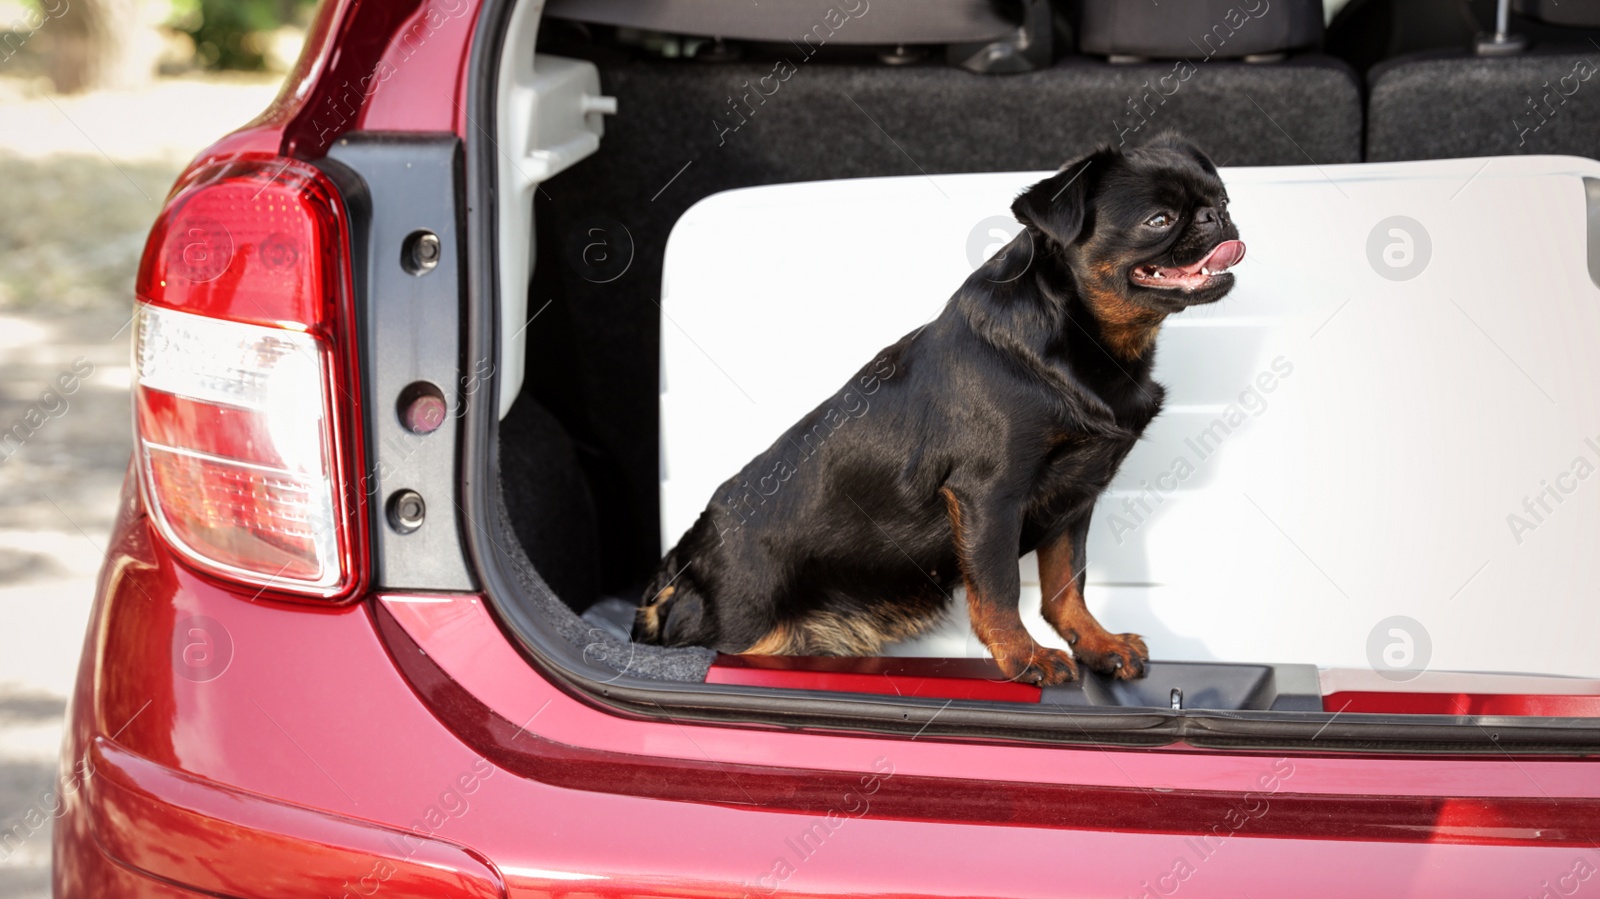 Photo of Cute Petit Brabancon dog sitting near suitcase in car trunk